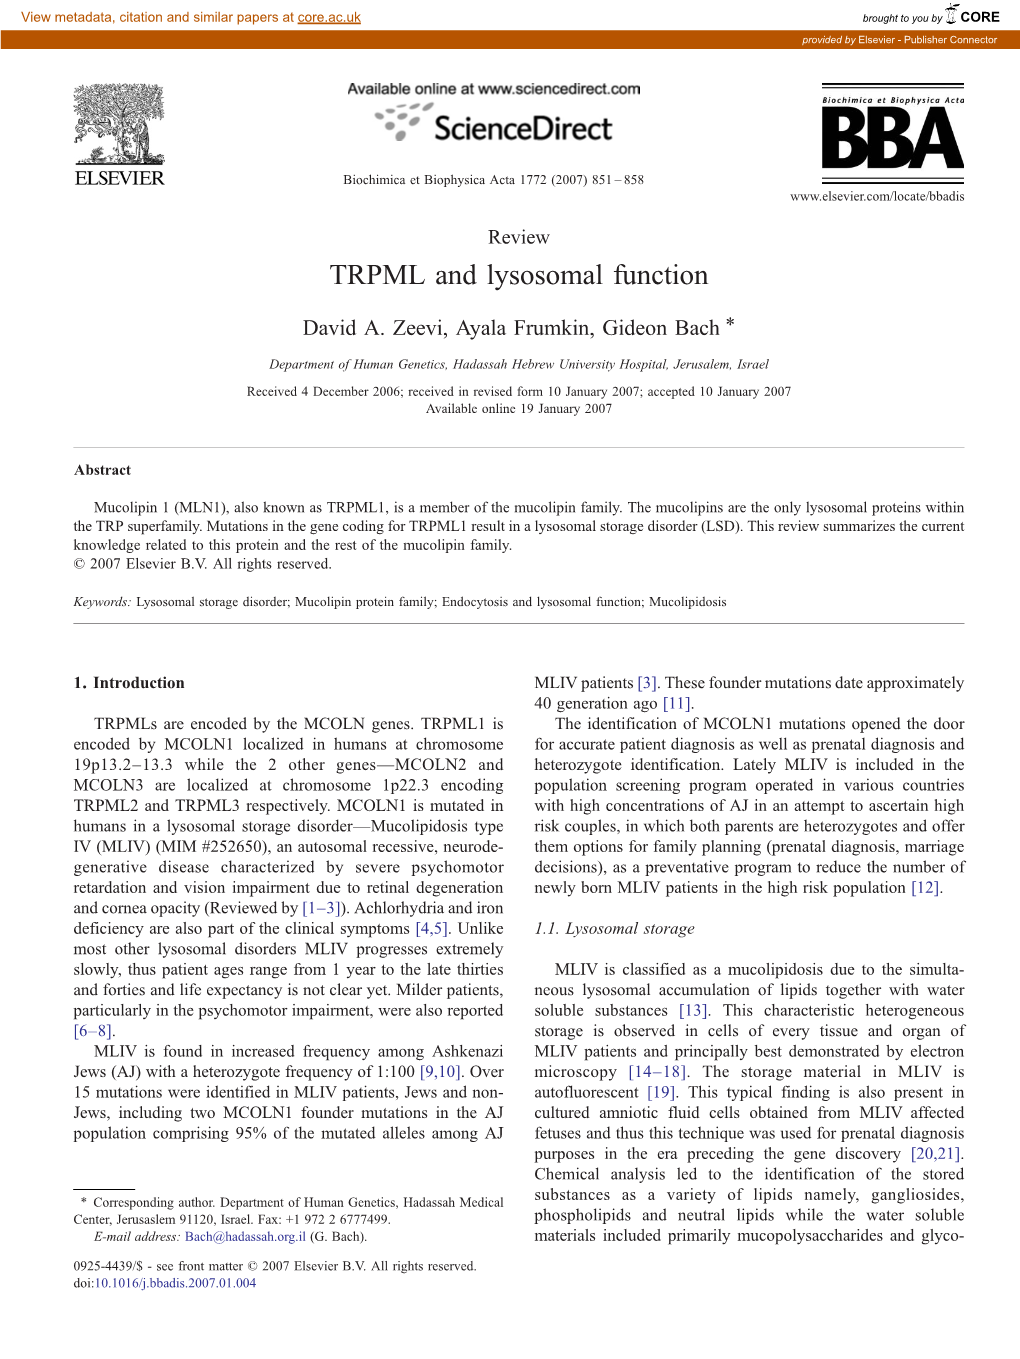 TRPML and Lysosomal Function ⁎ David A